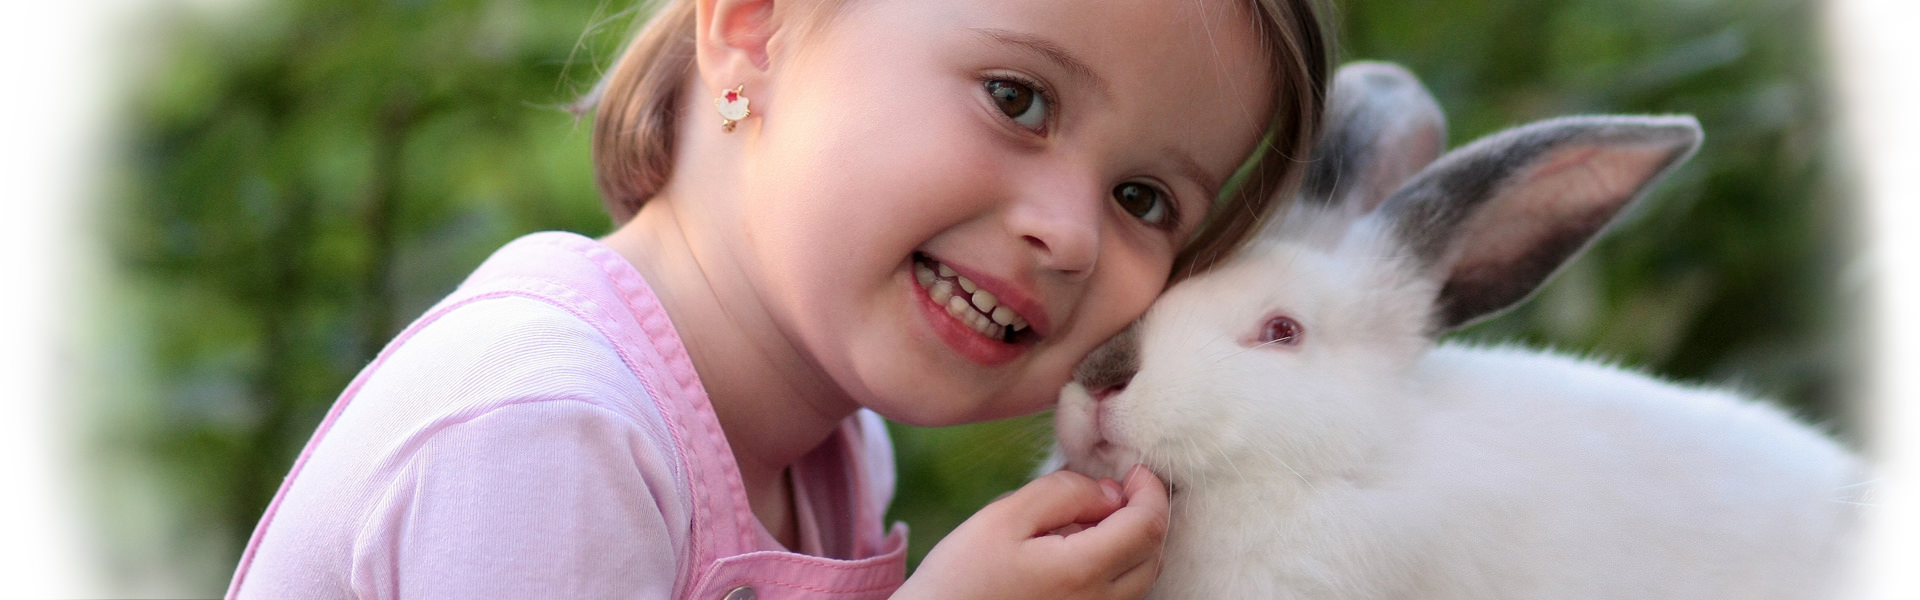 little girl with bunny